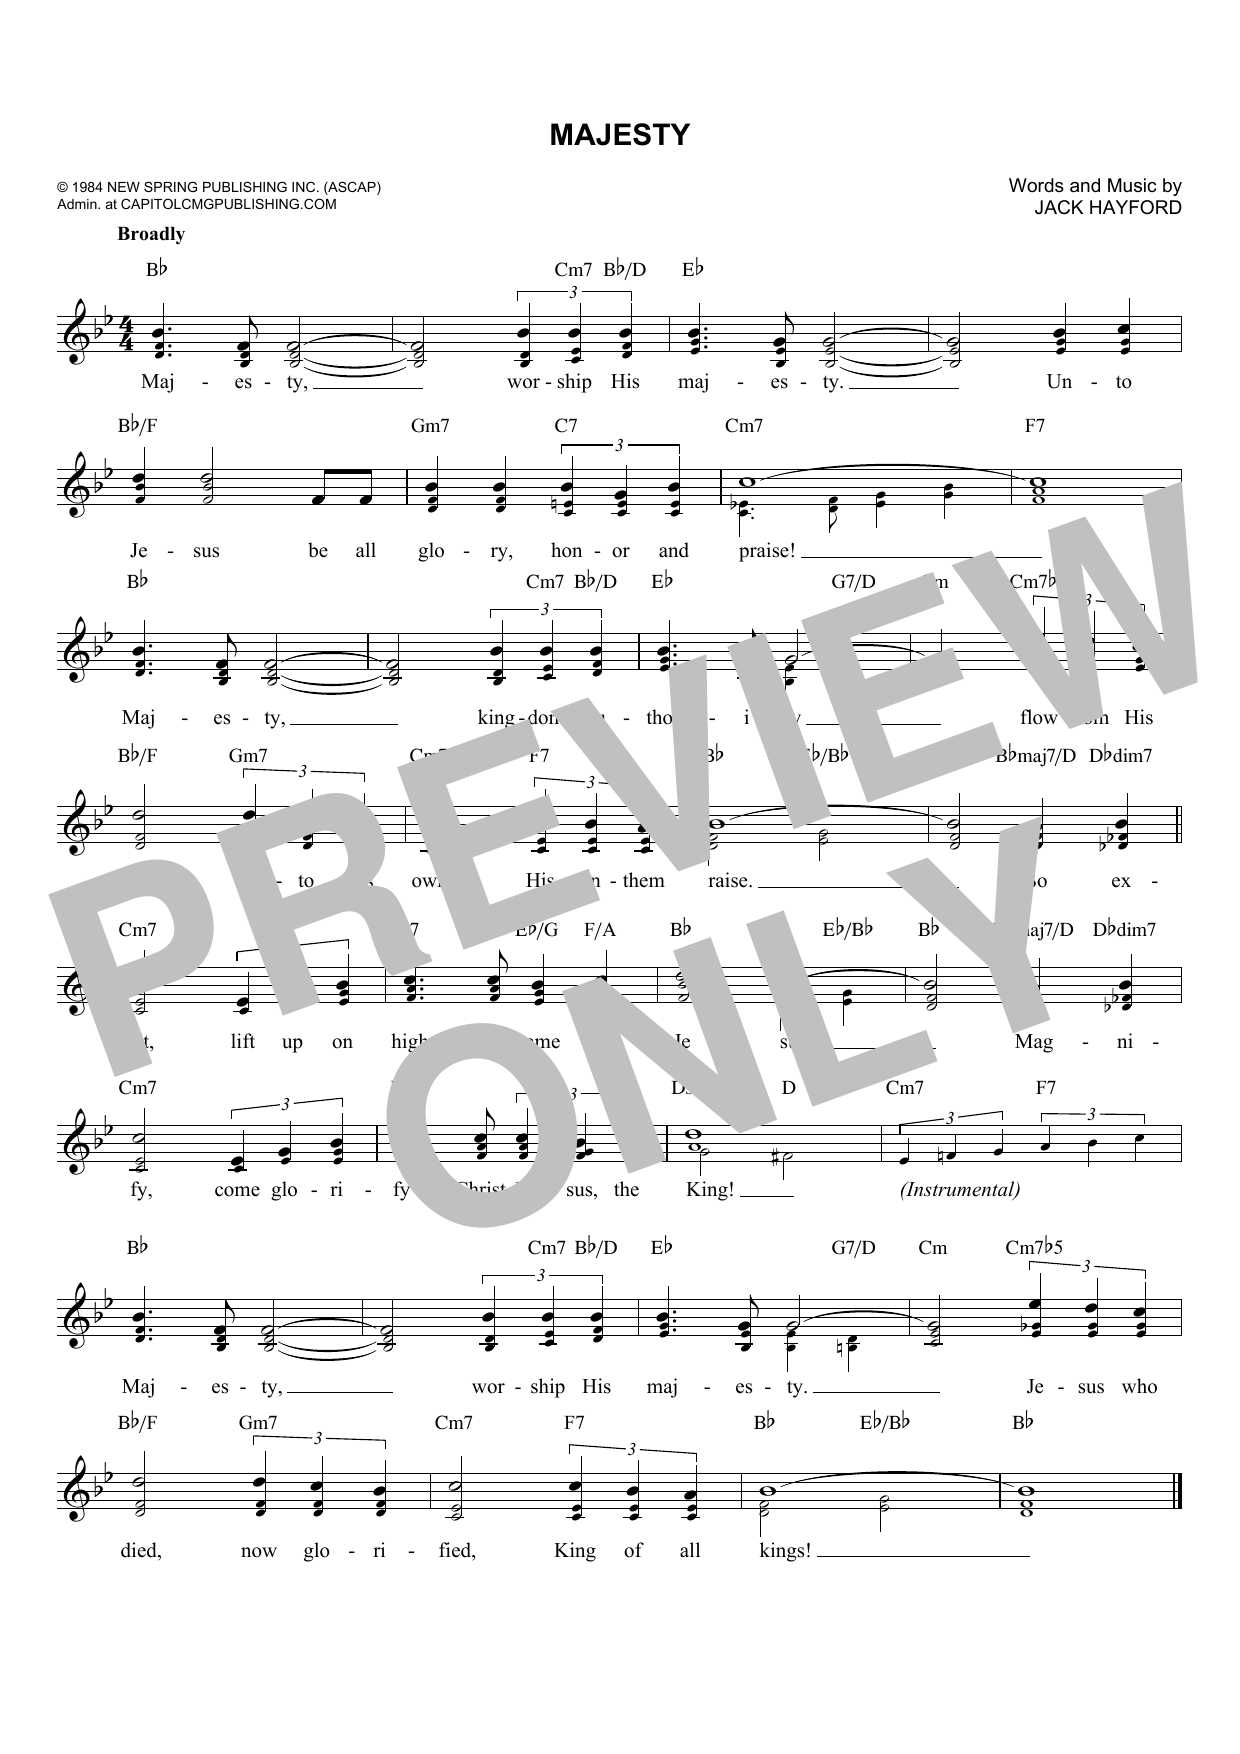 Jack Hayford Majesty Sheet Music Notes & Chords for Melody Line, Lyrics & Chords - Download or Print PDF